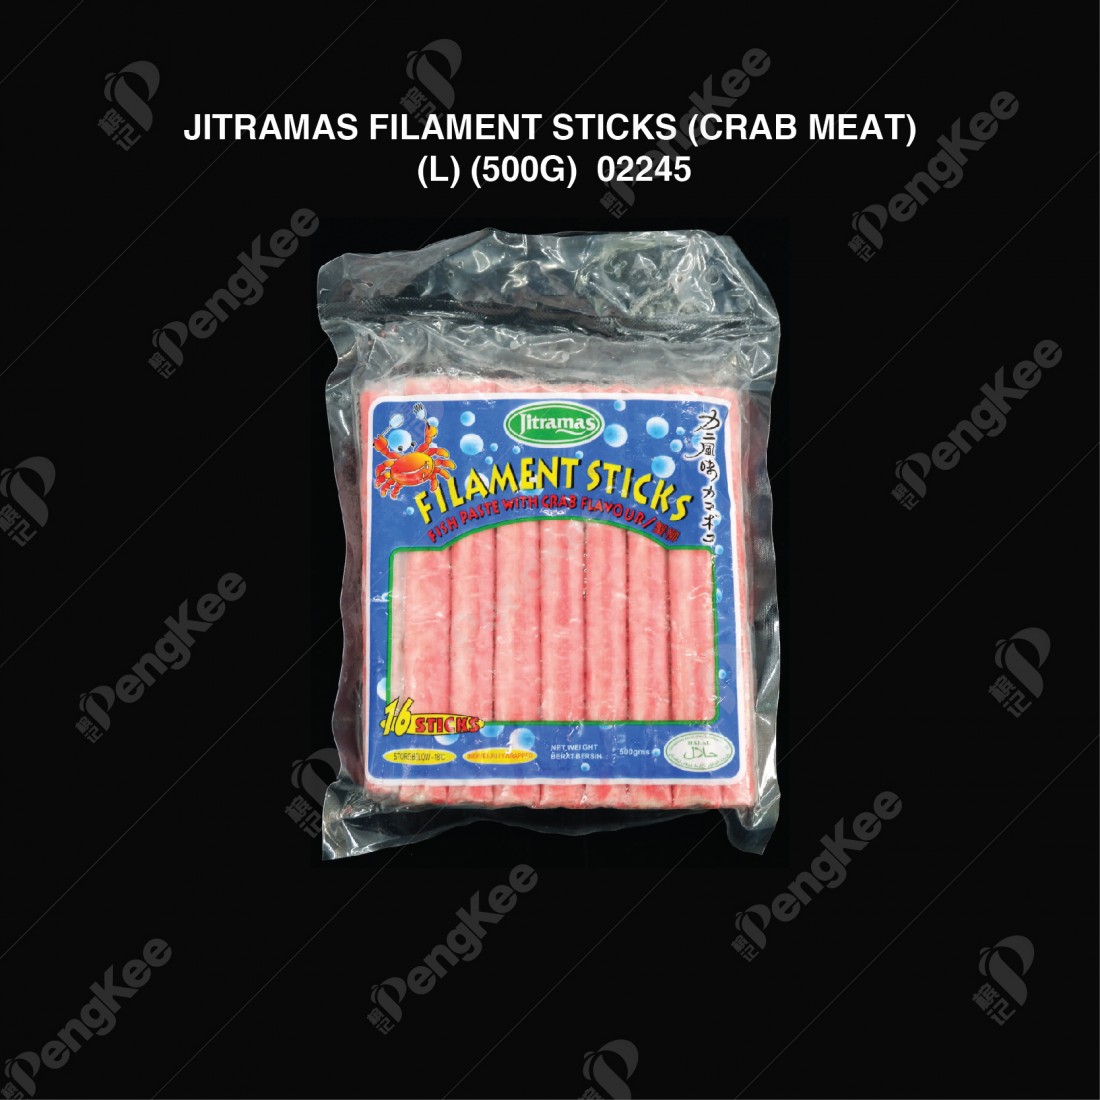 JITRAMAS FILAMENT STICKS (CRAB MEAT) (L) 